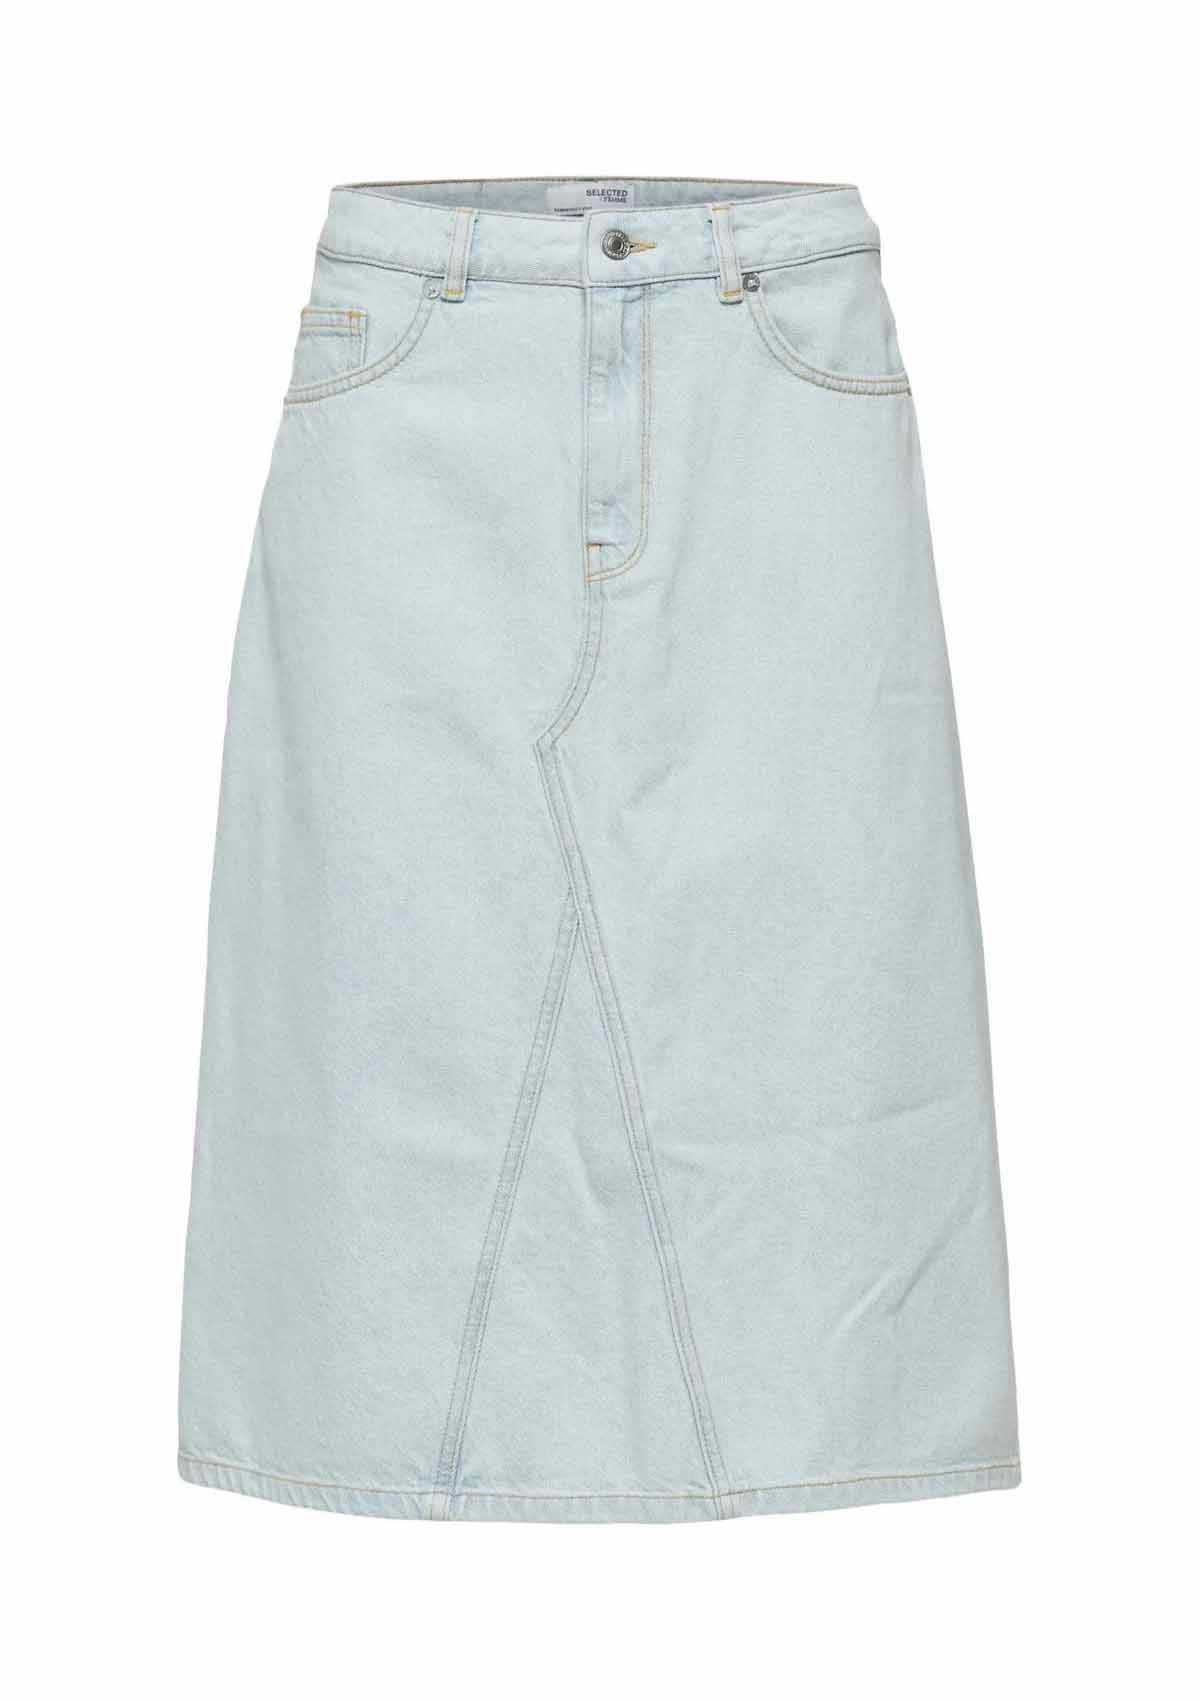 Selected Femme Ruby High Waist Blue Denim Skirt